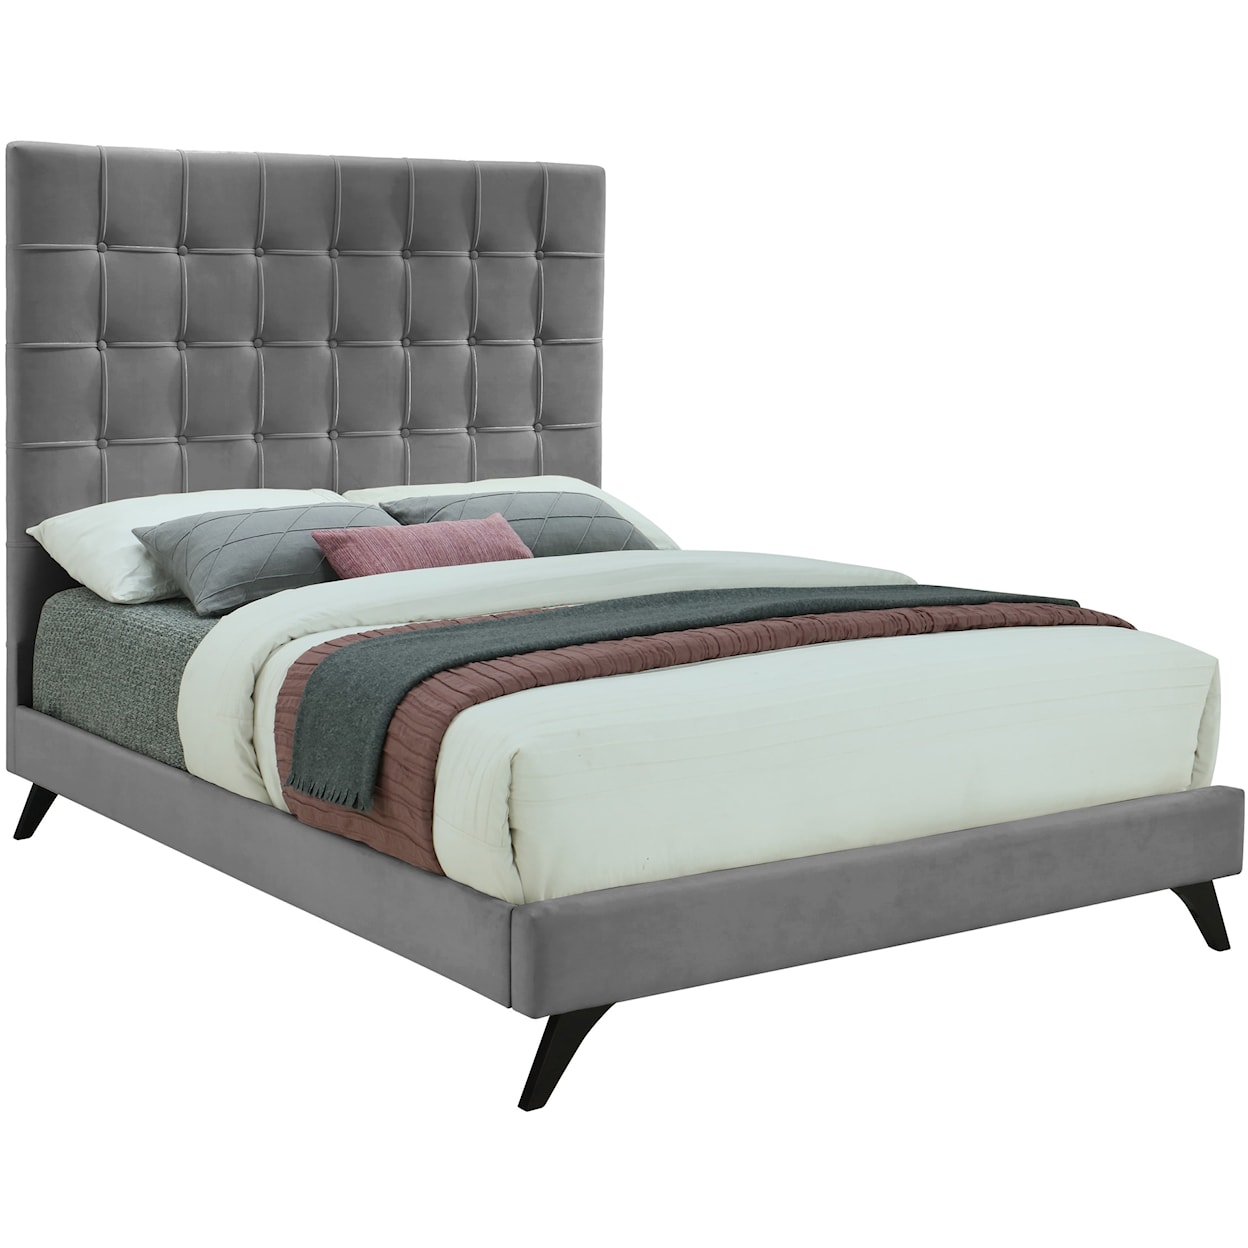 Meridian Furniture Elly King Bed